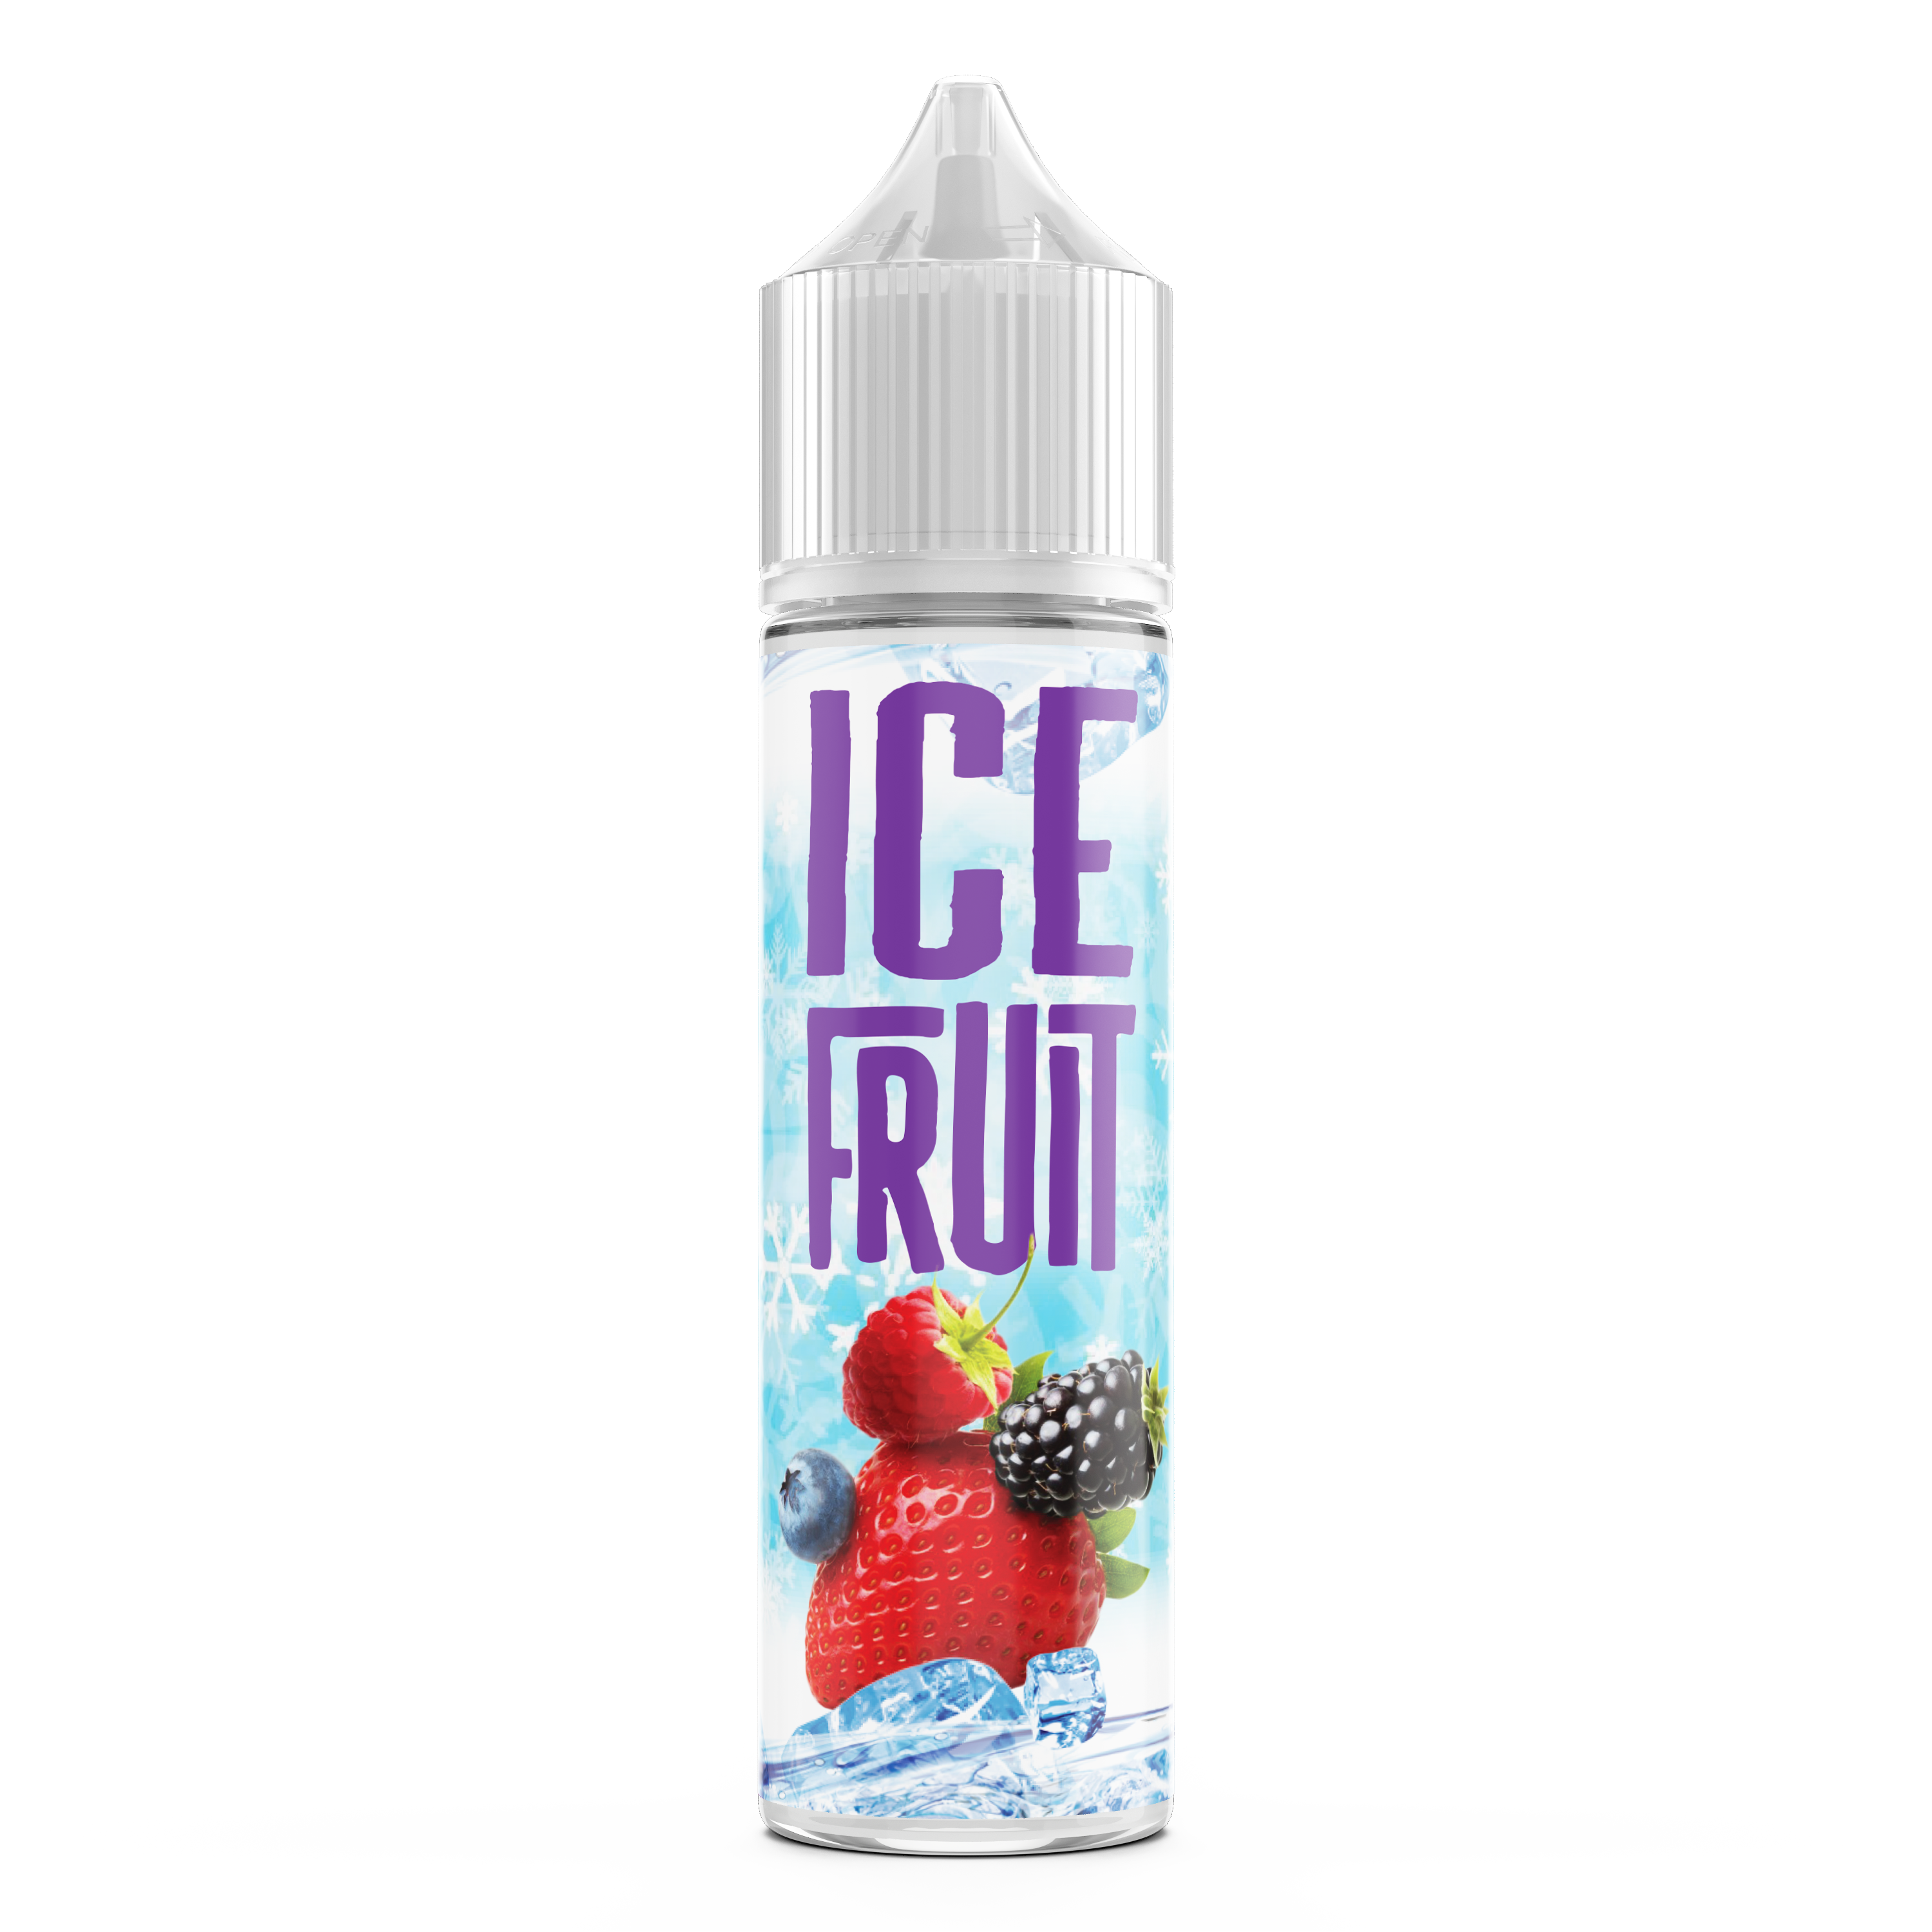 ICE FRUIT Bosvruchten Long Fill - Flavormonks